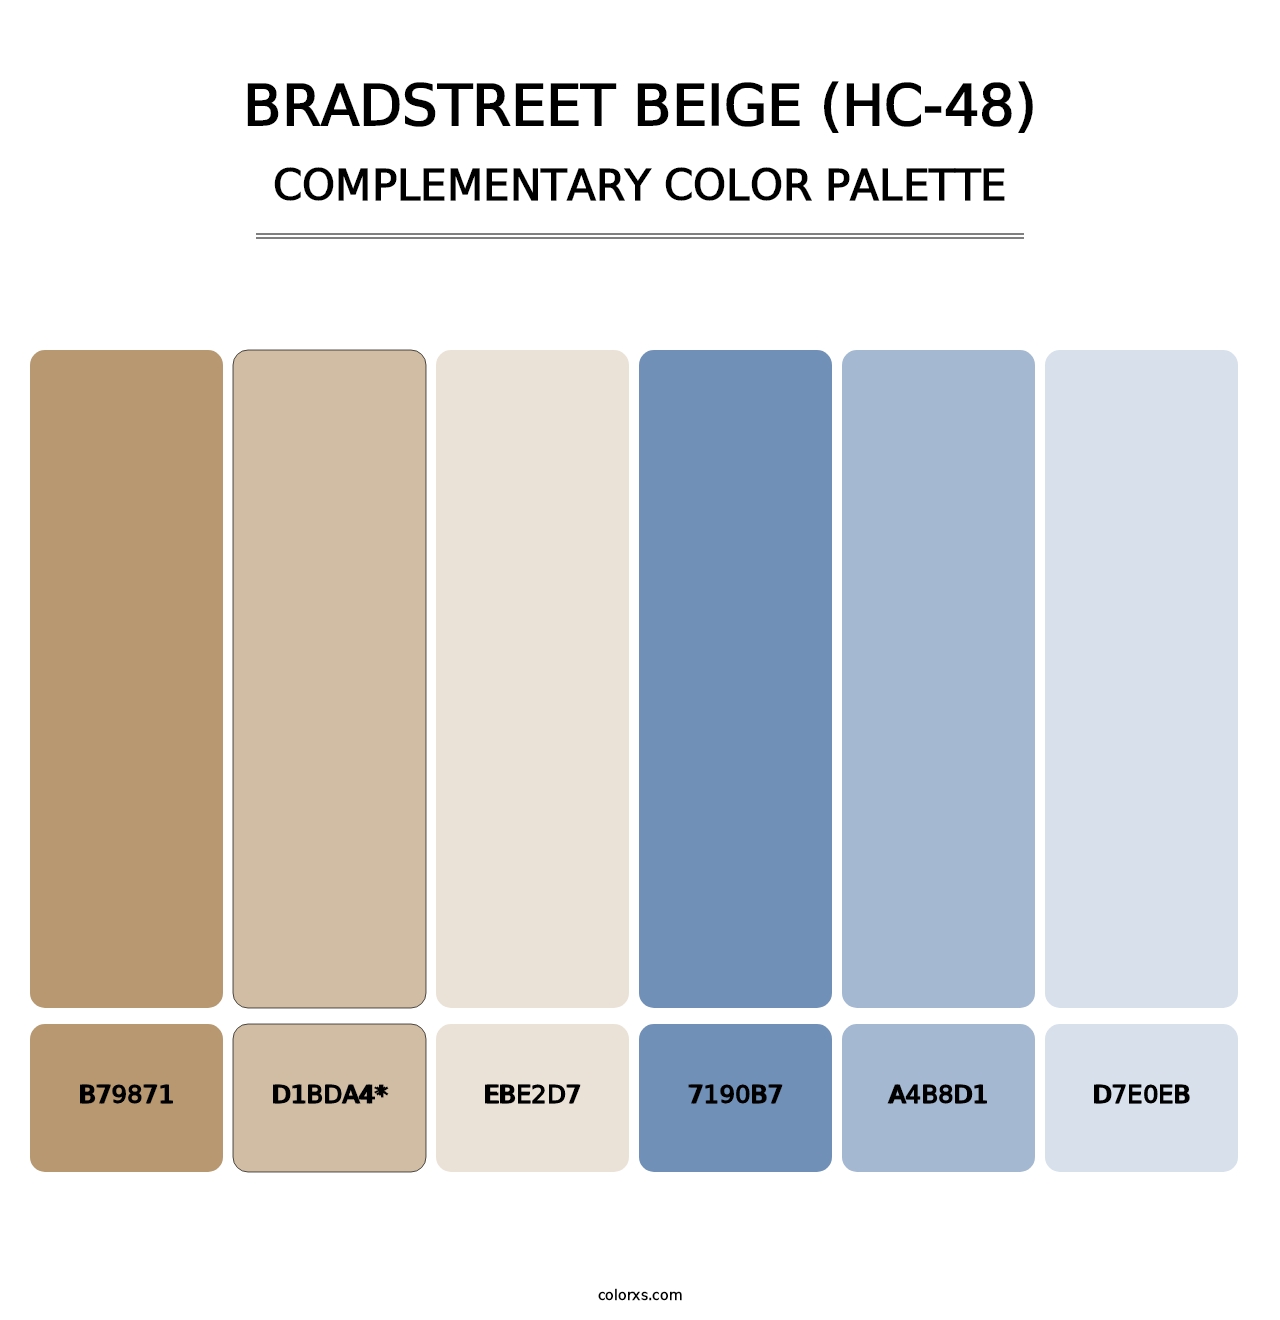 Bradstreet Beige (HC-48) - Complementary Color Palette